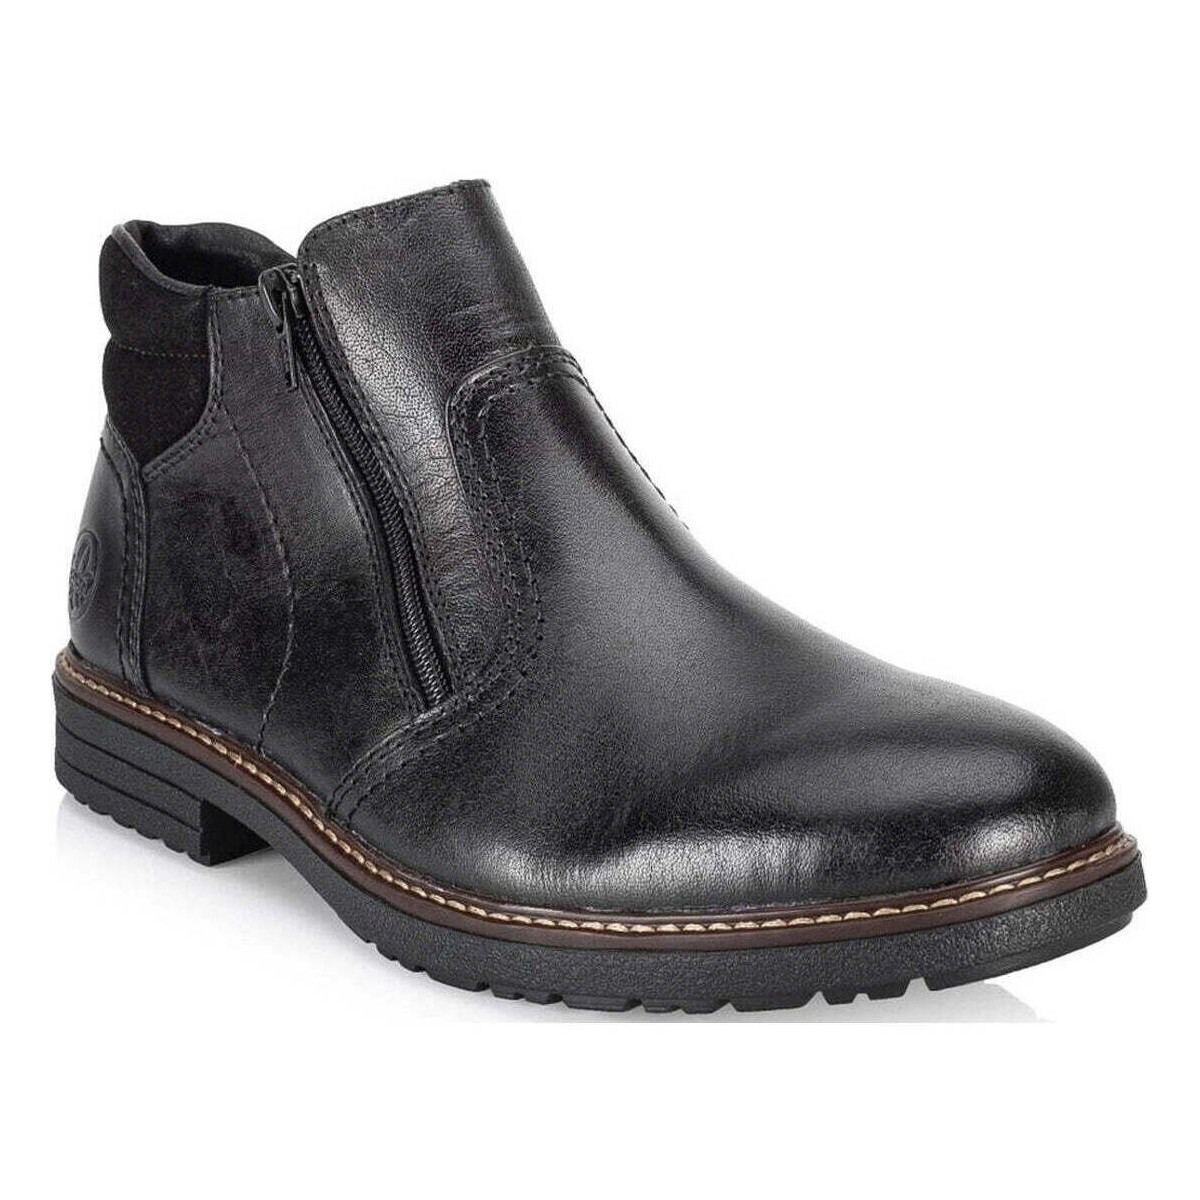 Pantofi Bărbați Ghete Rieker  Negru